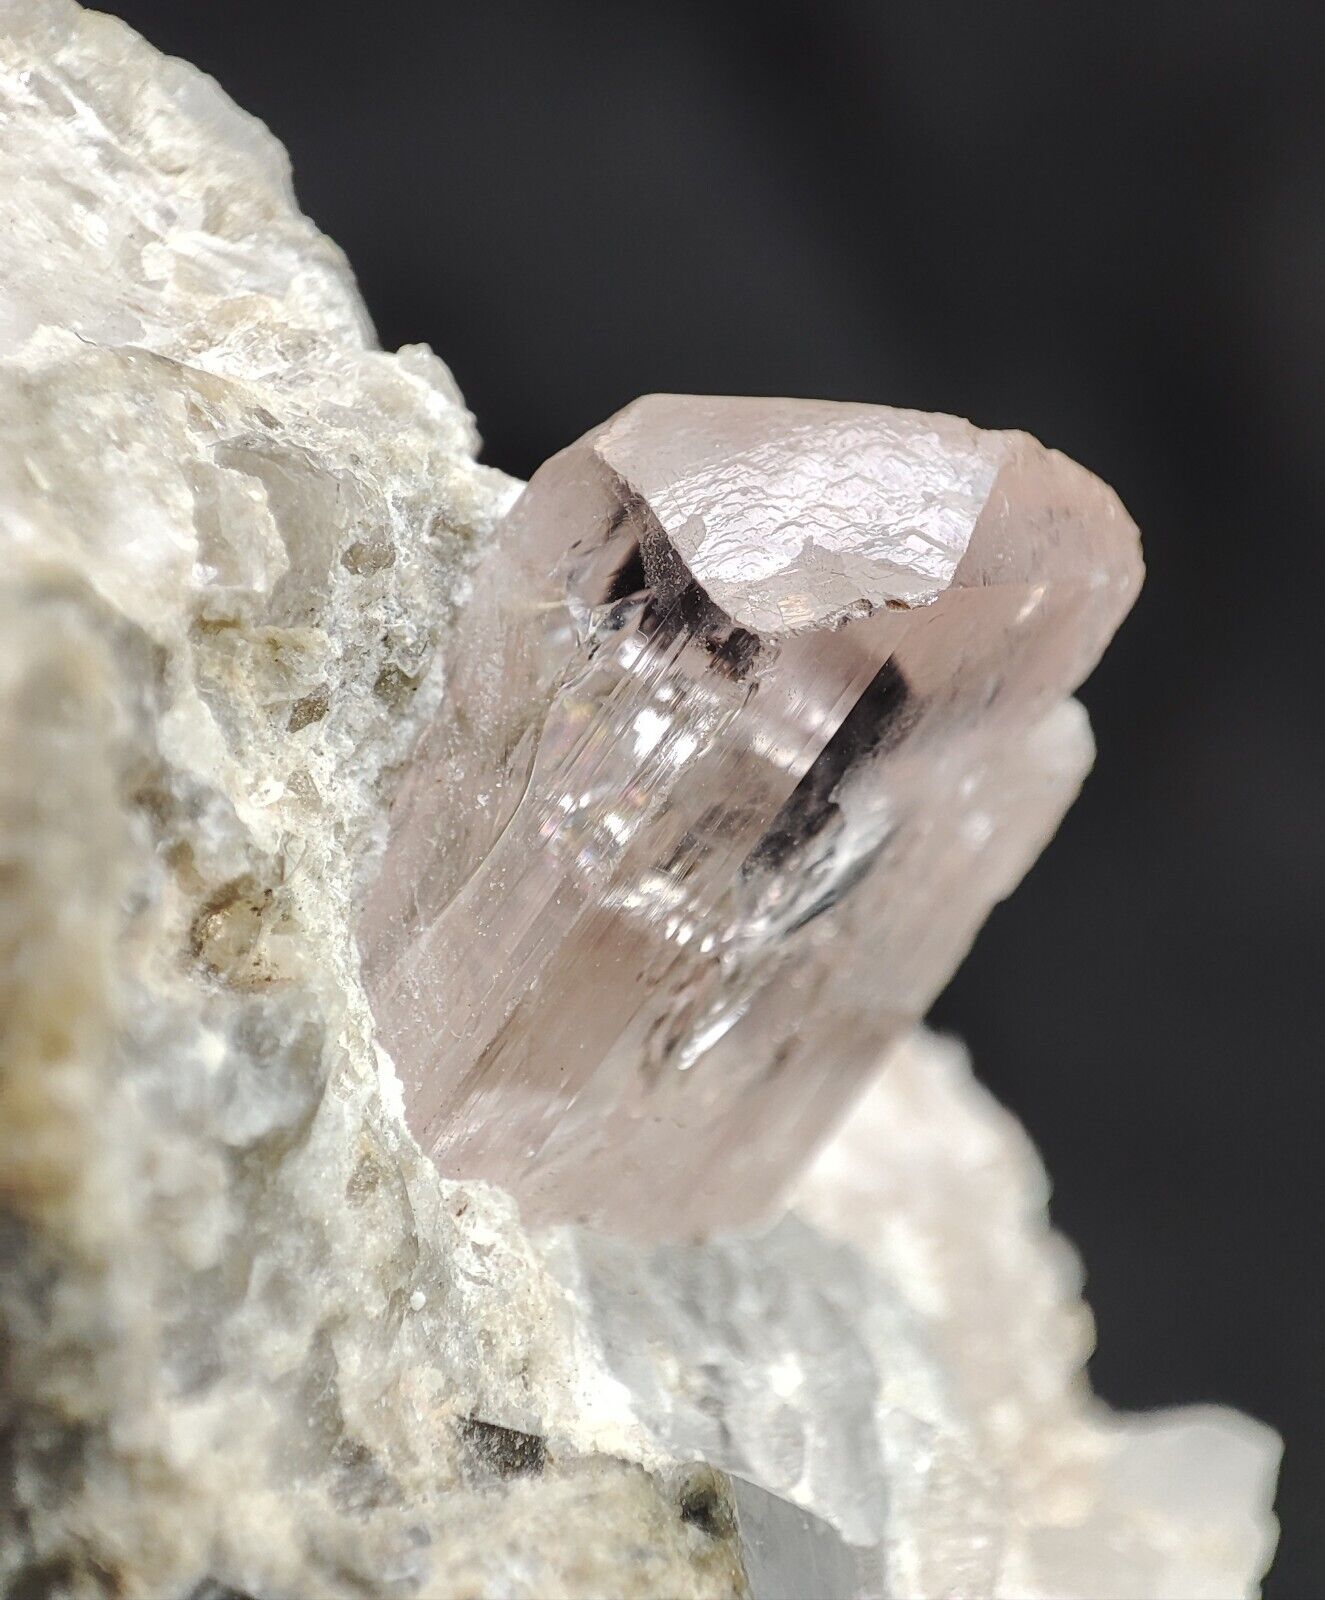 Imperial Topaz Terminated Twin Crystals On Matrix,Pink Topaz Specimen @Pakistan 